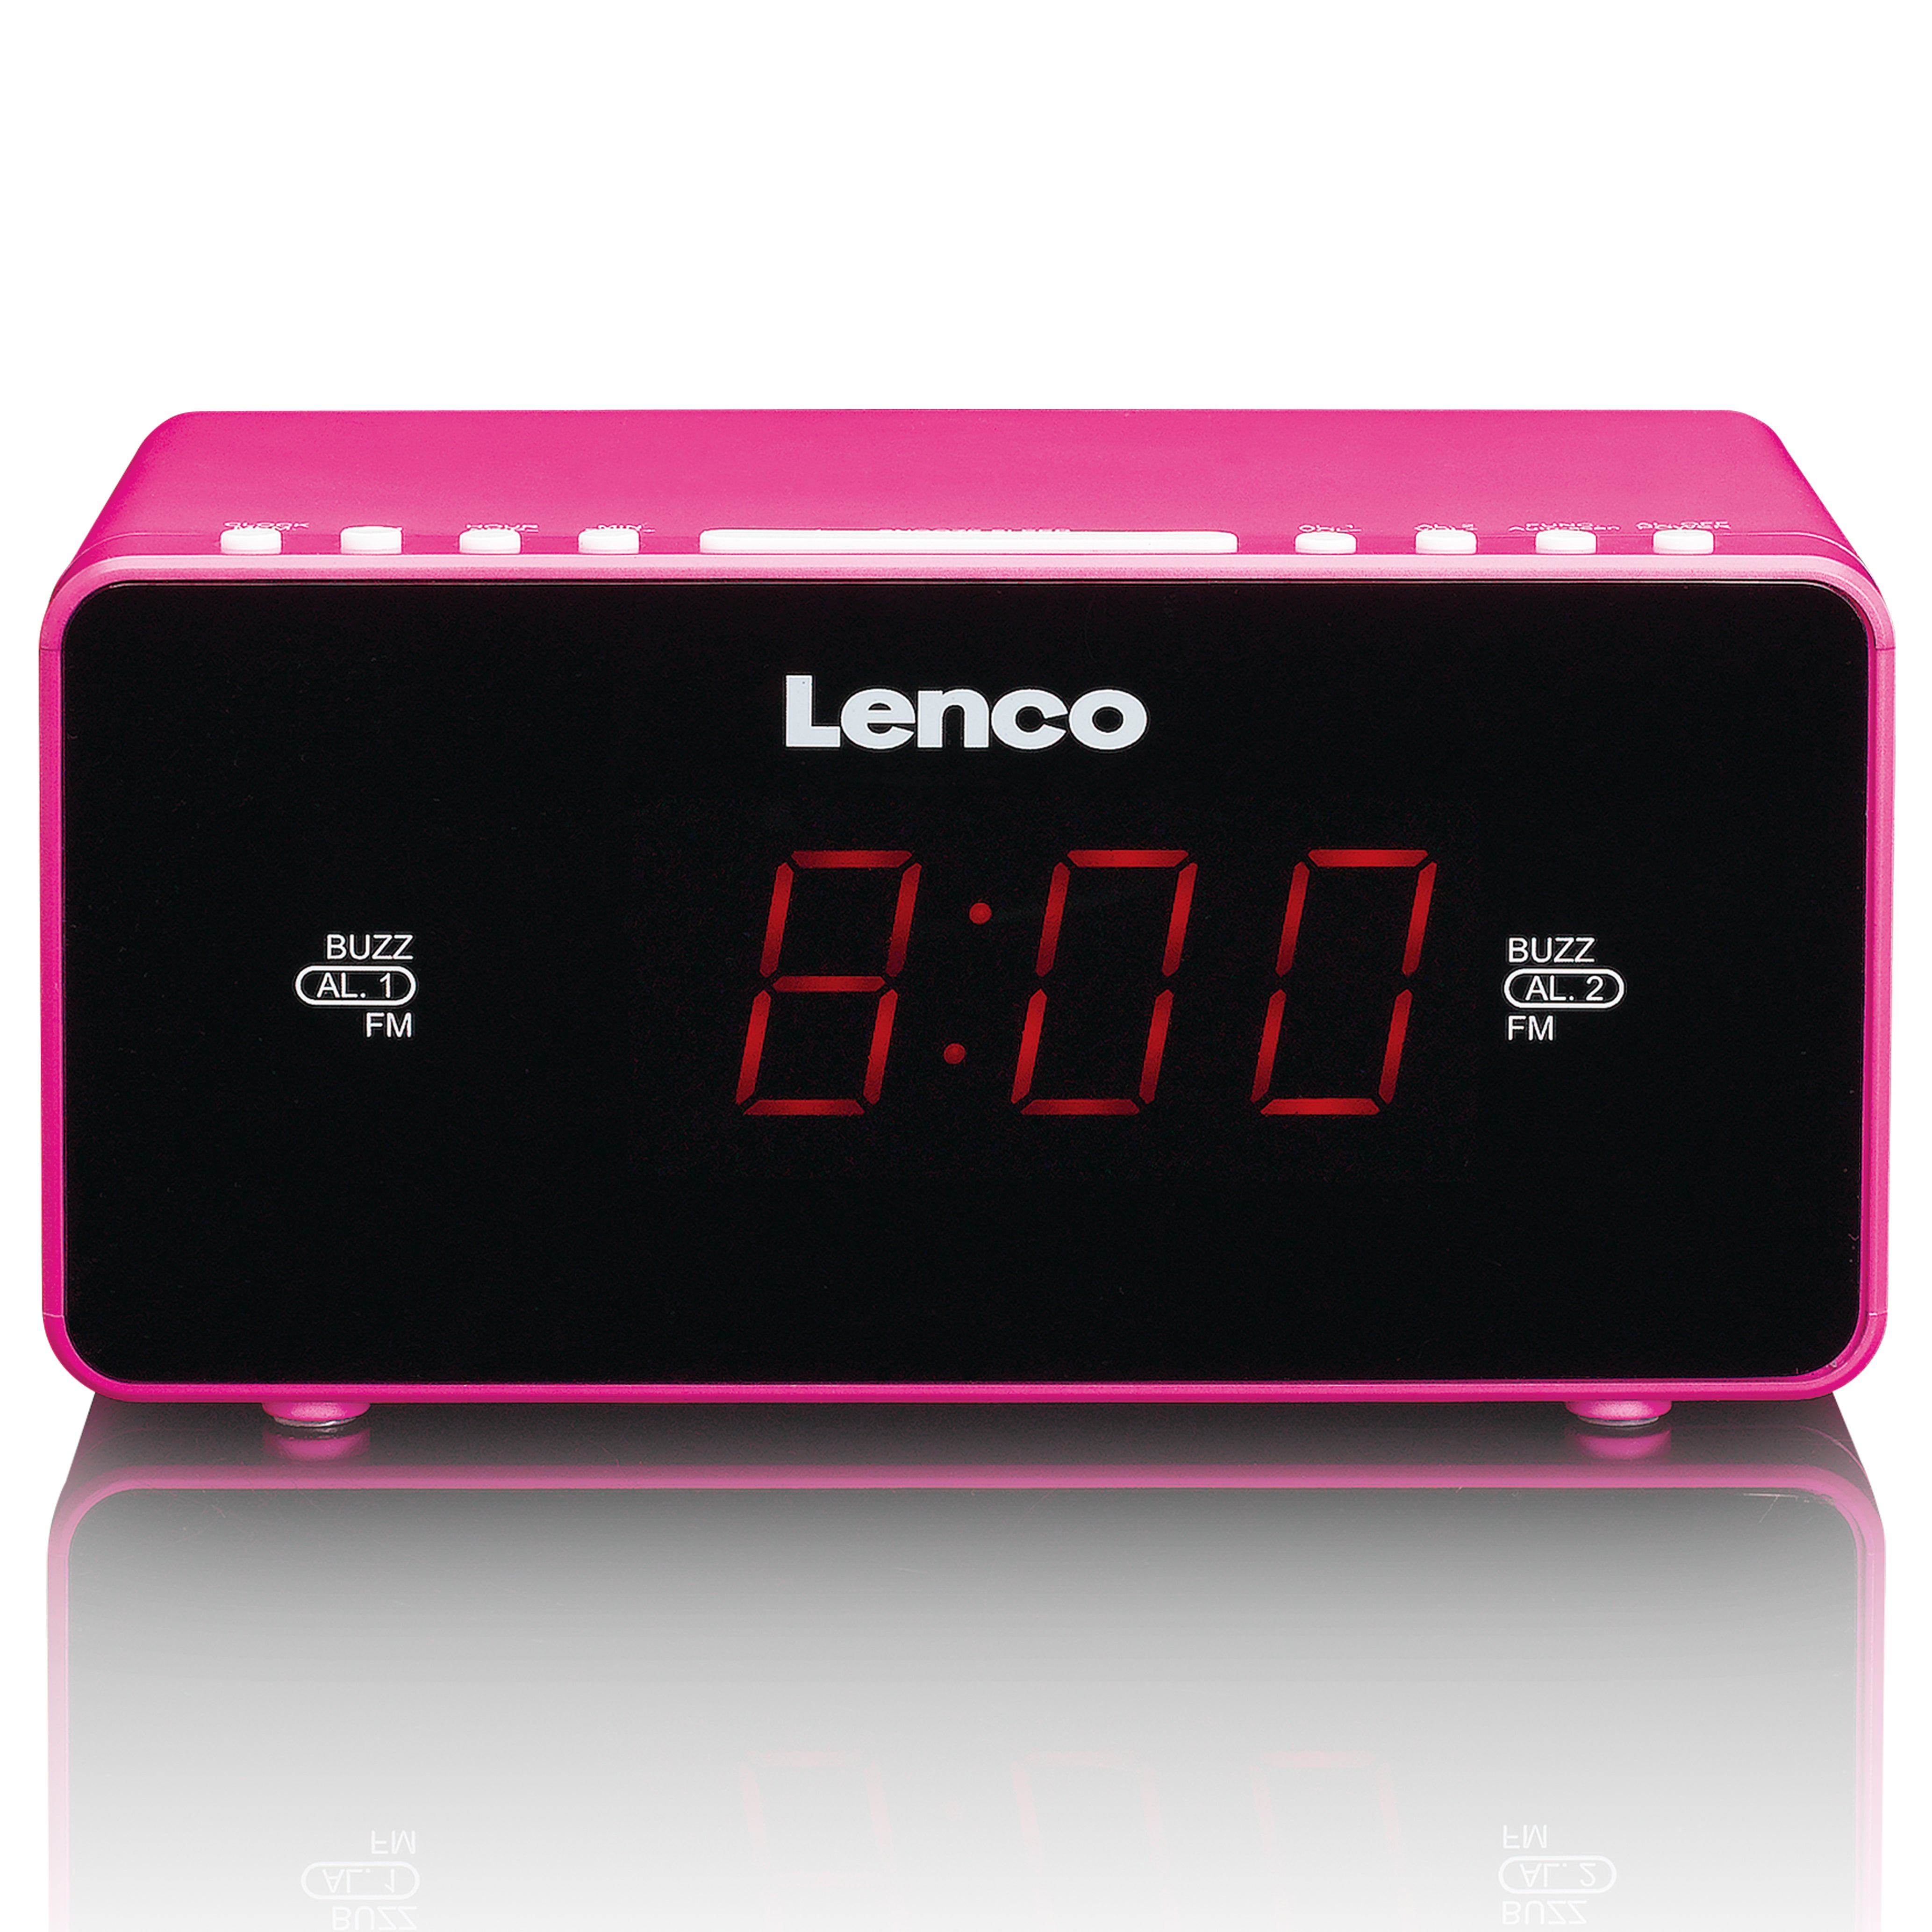 Lenco.de | offiziellen Offizieller Lenco - – Webshop Jetzt Webshop im Lenco CR-510PK kaufen?